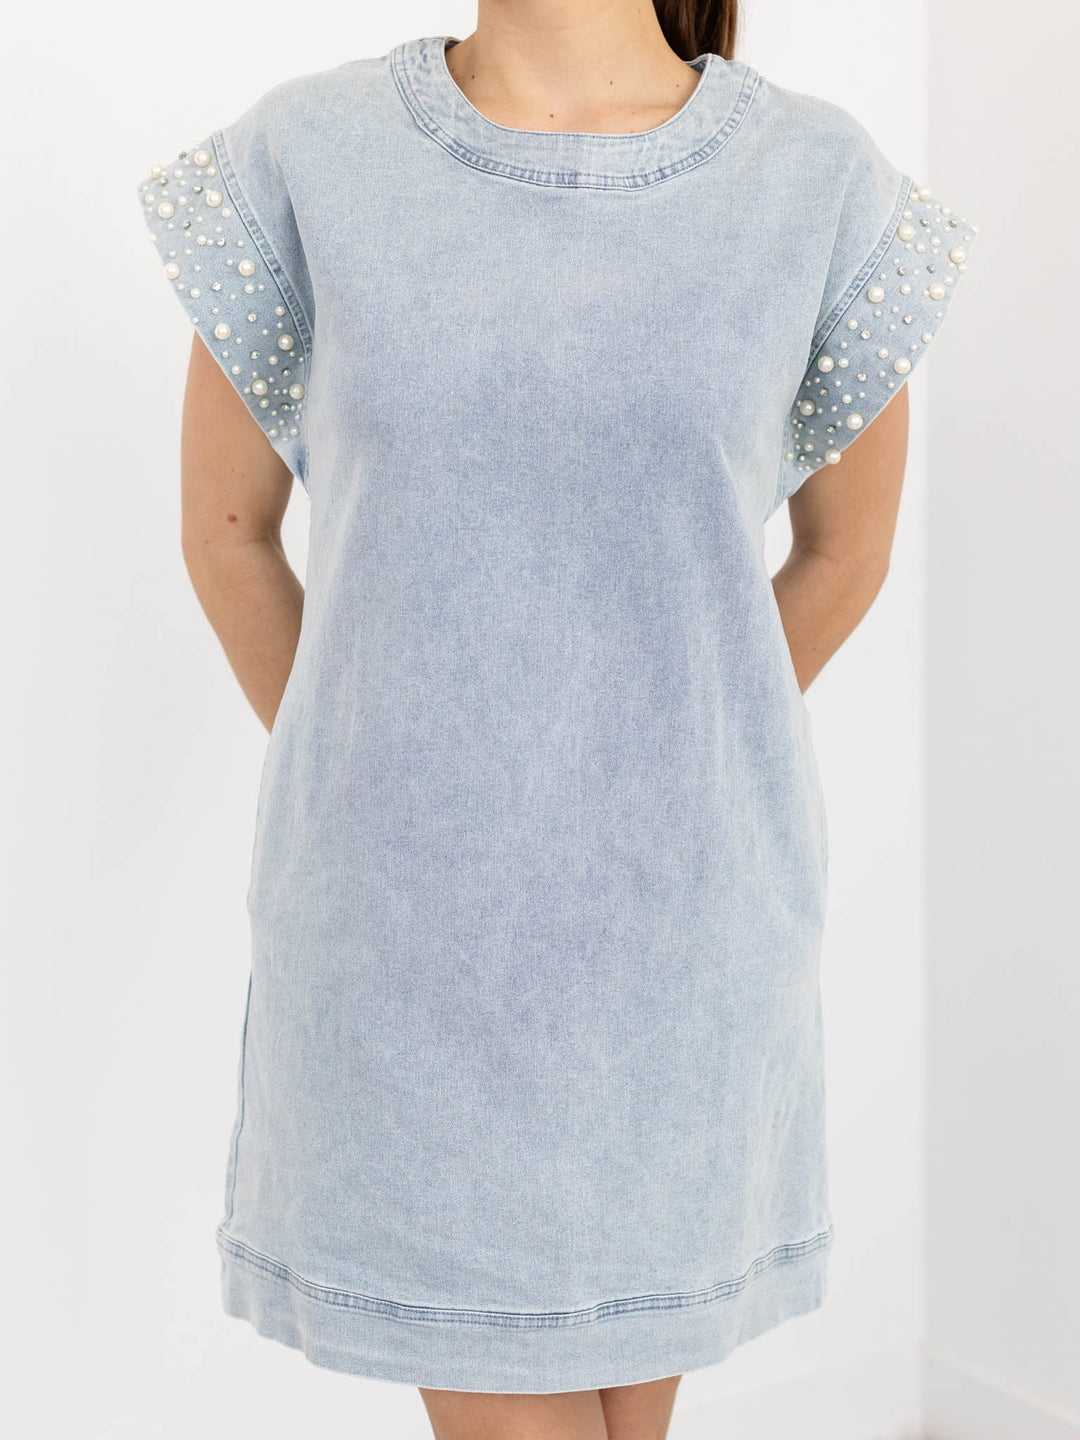 Rhinestone Pearl Sleeve T-Shirt DressDress